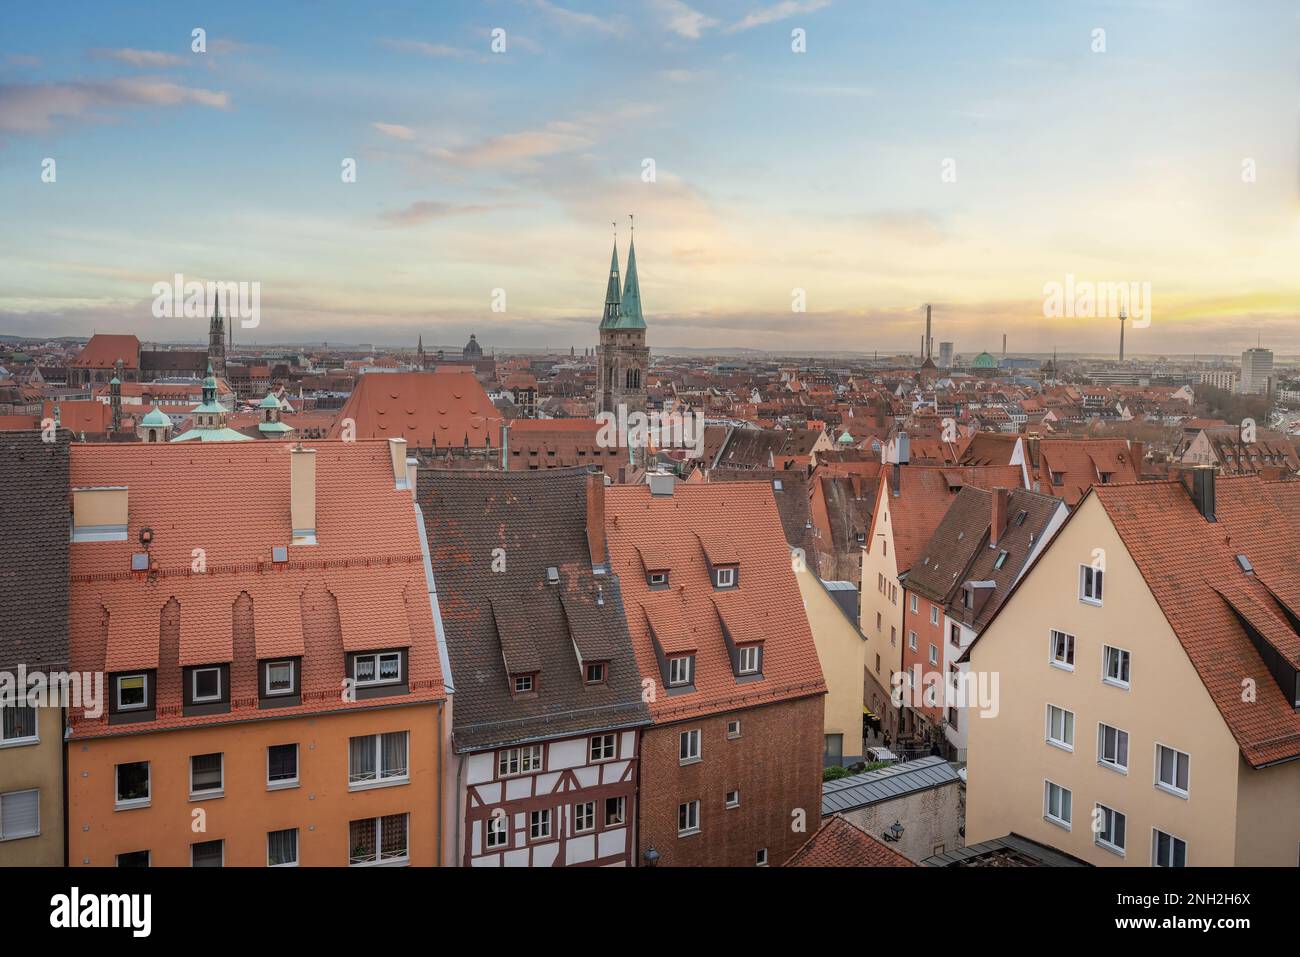 Nürnberg bei Sonnenuntergang aus der Vogelperspektive mit St. Sebaldus-Kirchenturm (Sebalduskirche) - Nürnberg, Bayern, Deutschland Stockfoto